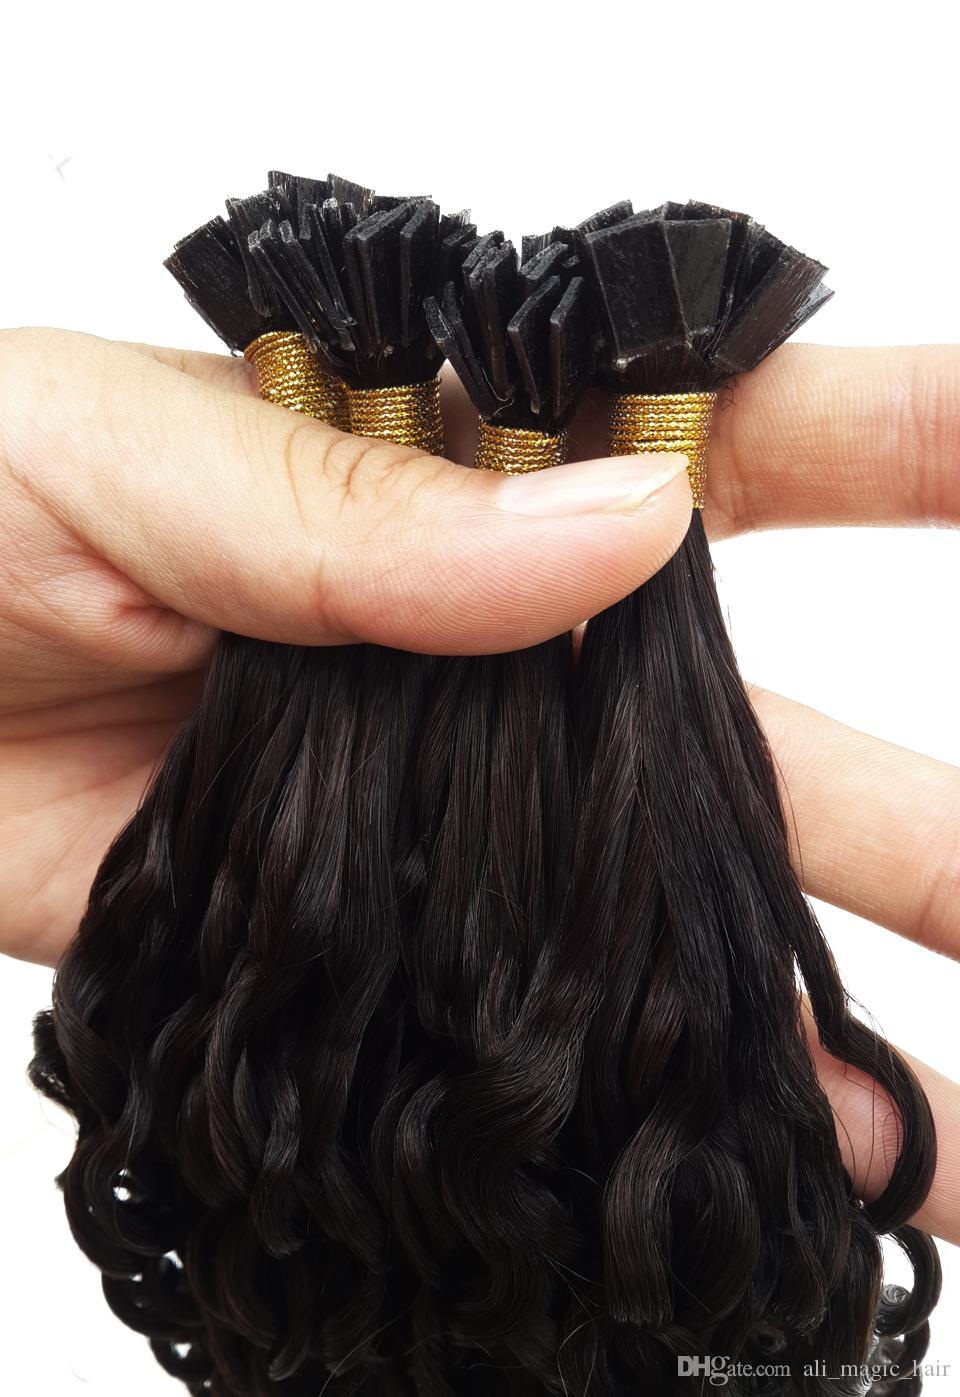 Flat Keratin Tip Curly Hair Extensions 100 Cambodian Human Hair Cambodian Hair Vendor